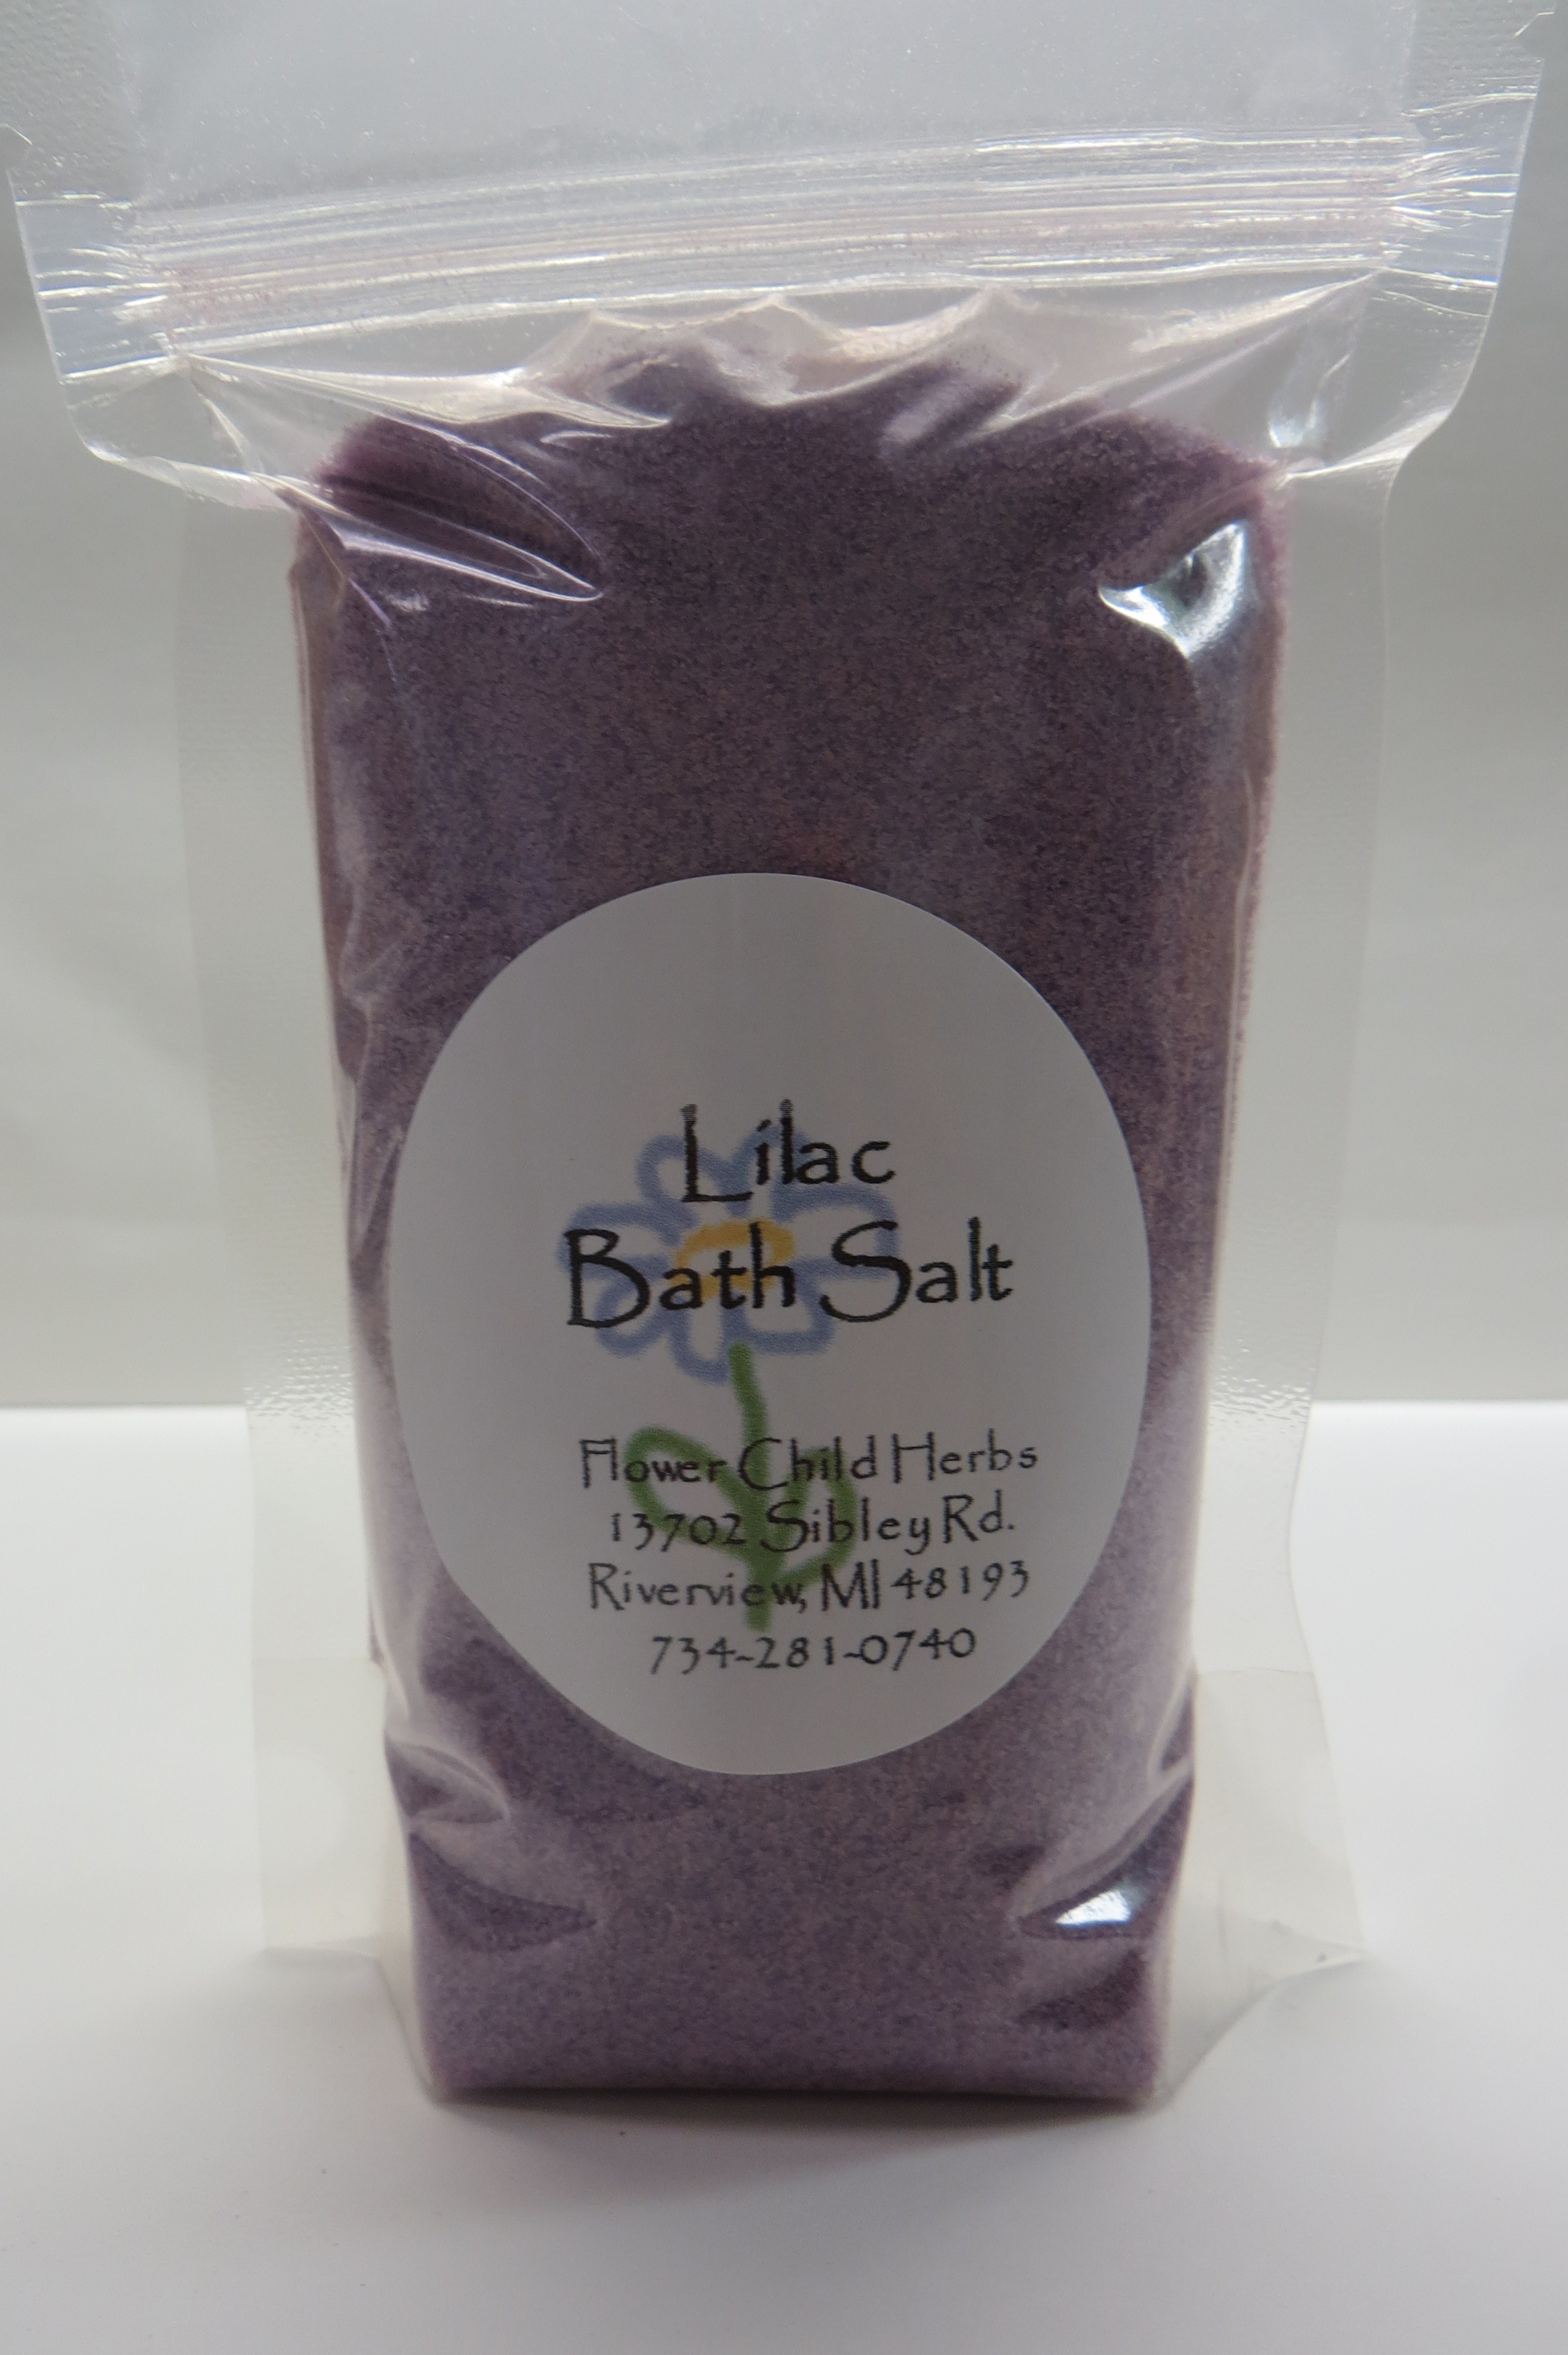 Lilac Bath Salt